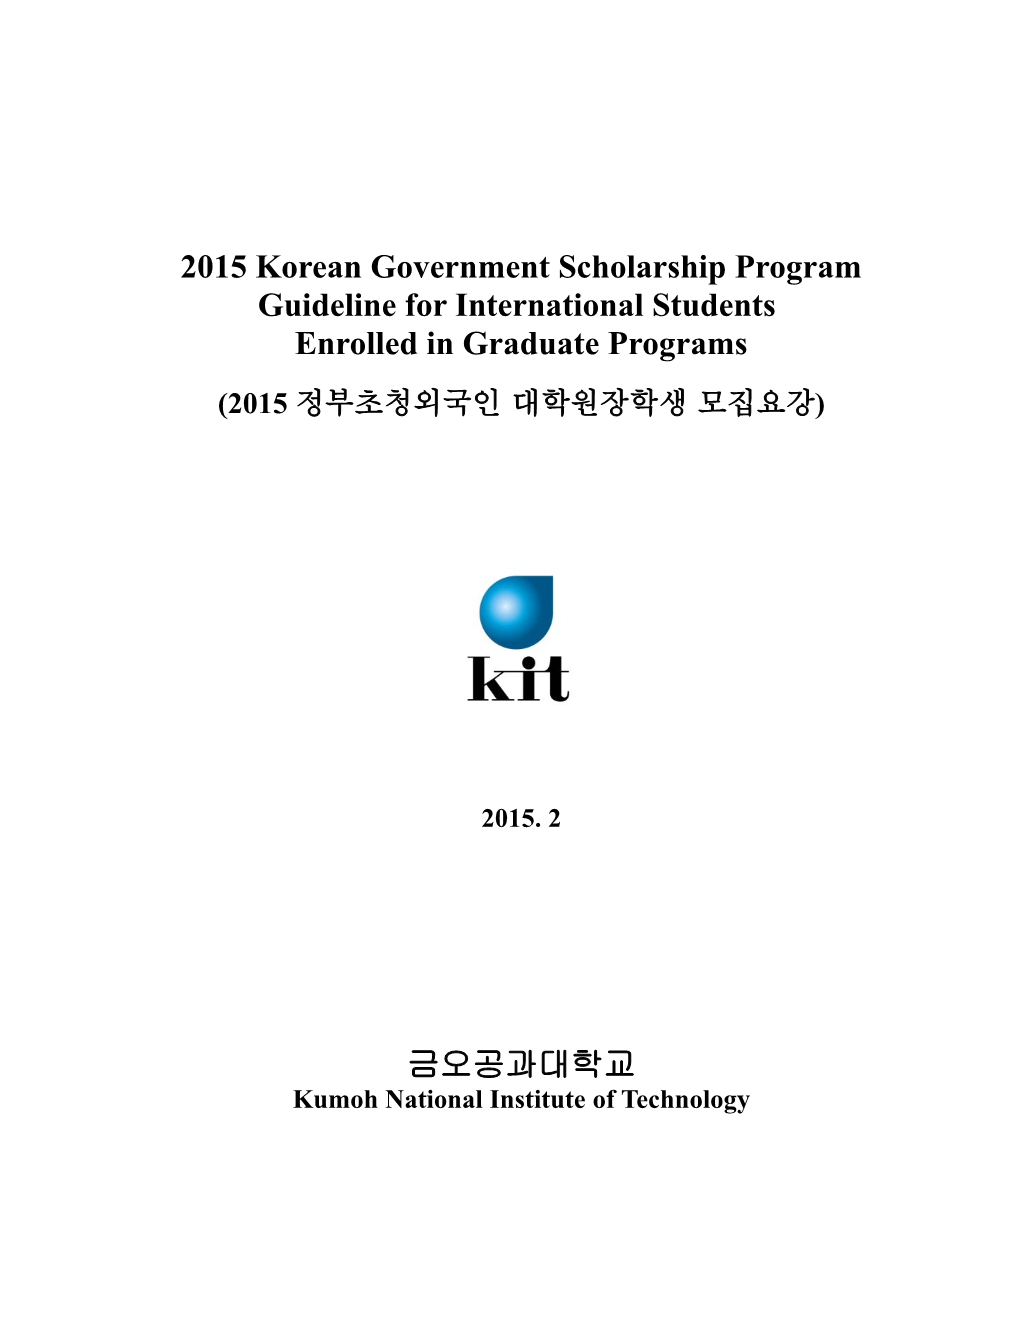 2015 Korean Government Scholarship Program s2